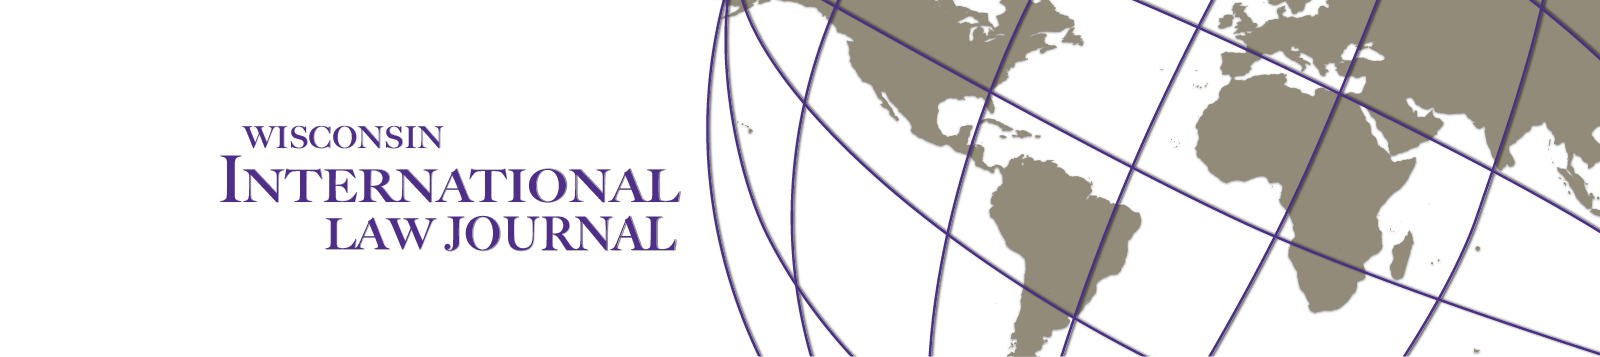 Wisconsin International Law Journal Logo